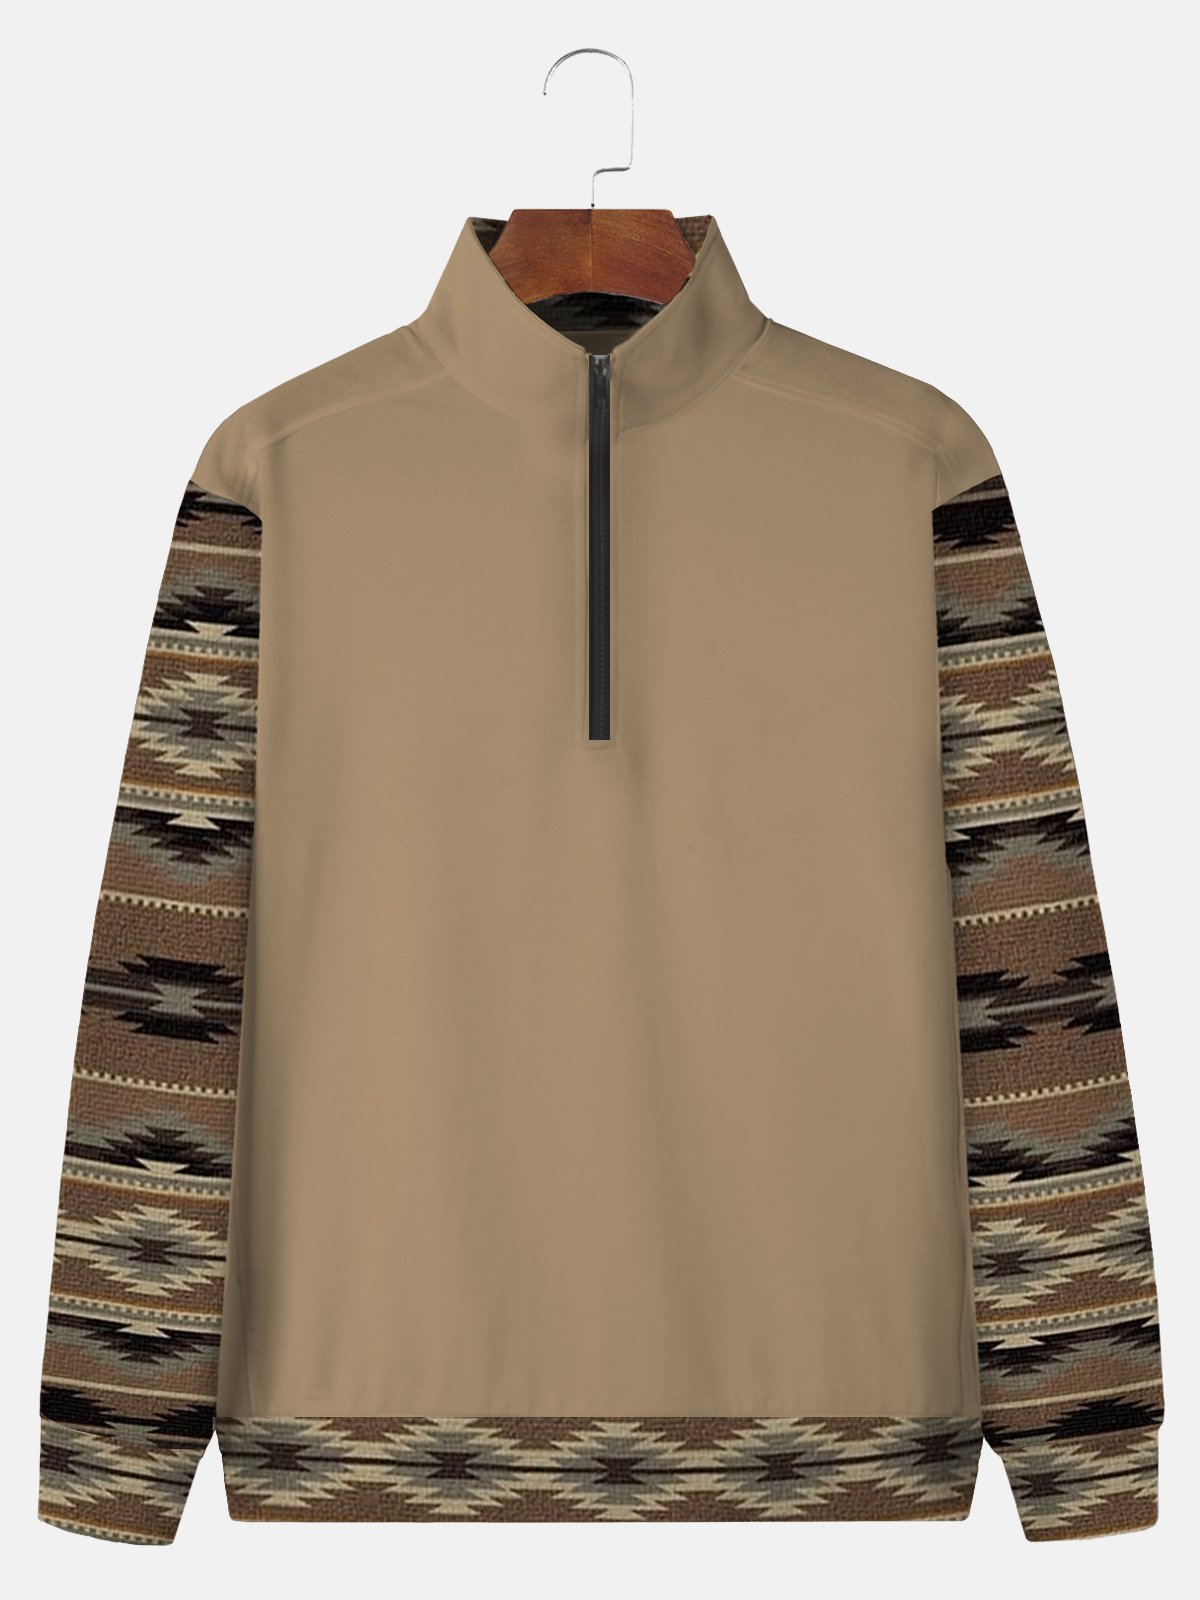 JoyMitty Men's Vintage Geometric Print Stand Collar Zipper Sweatshirt